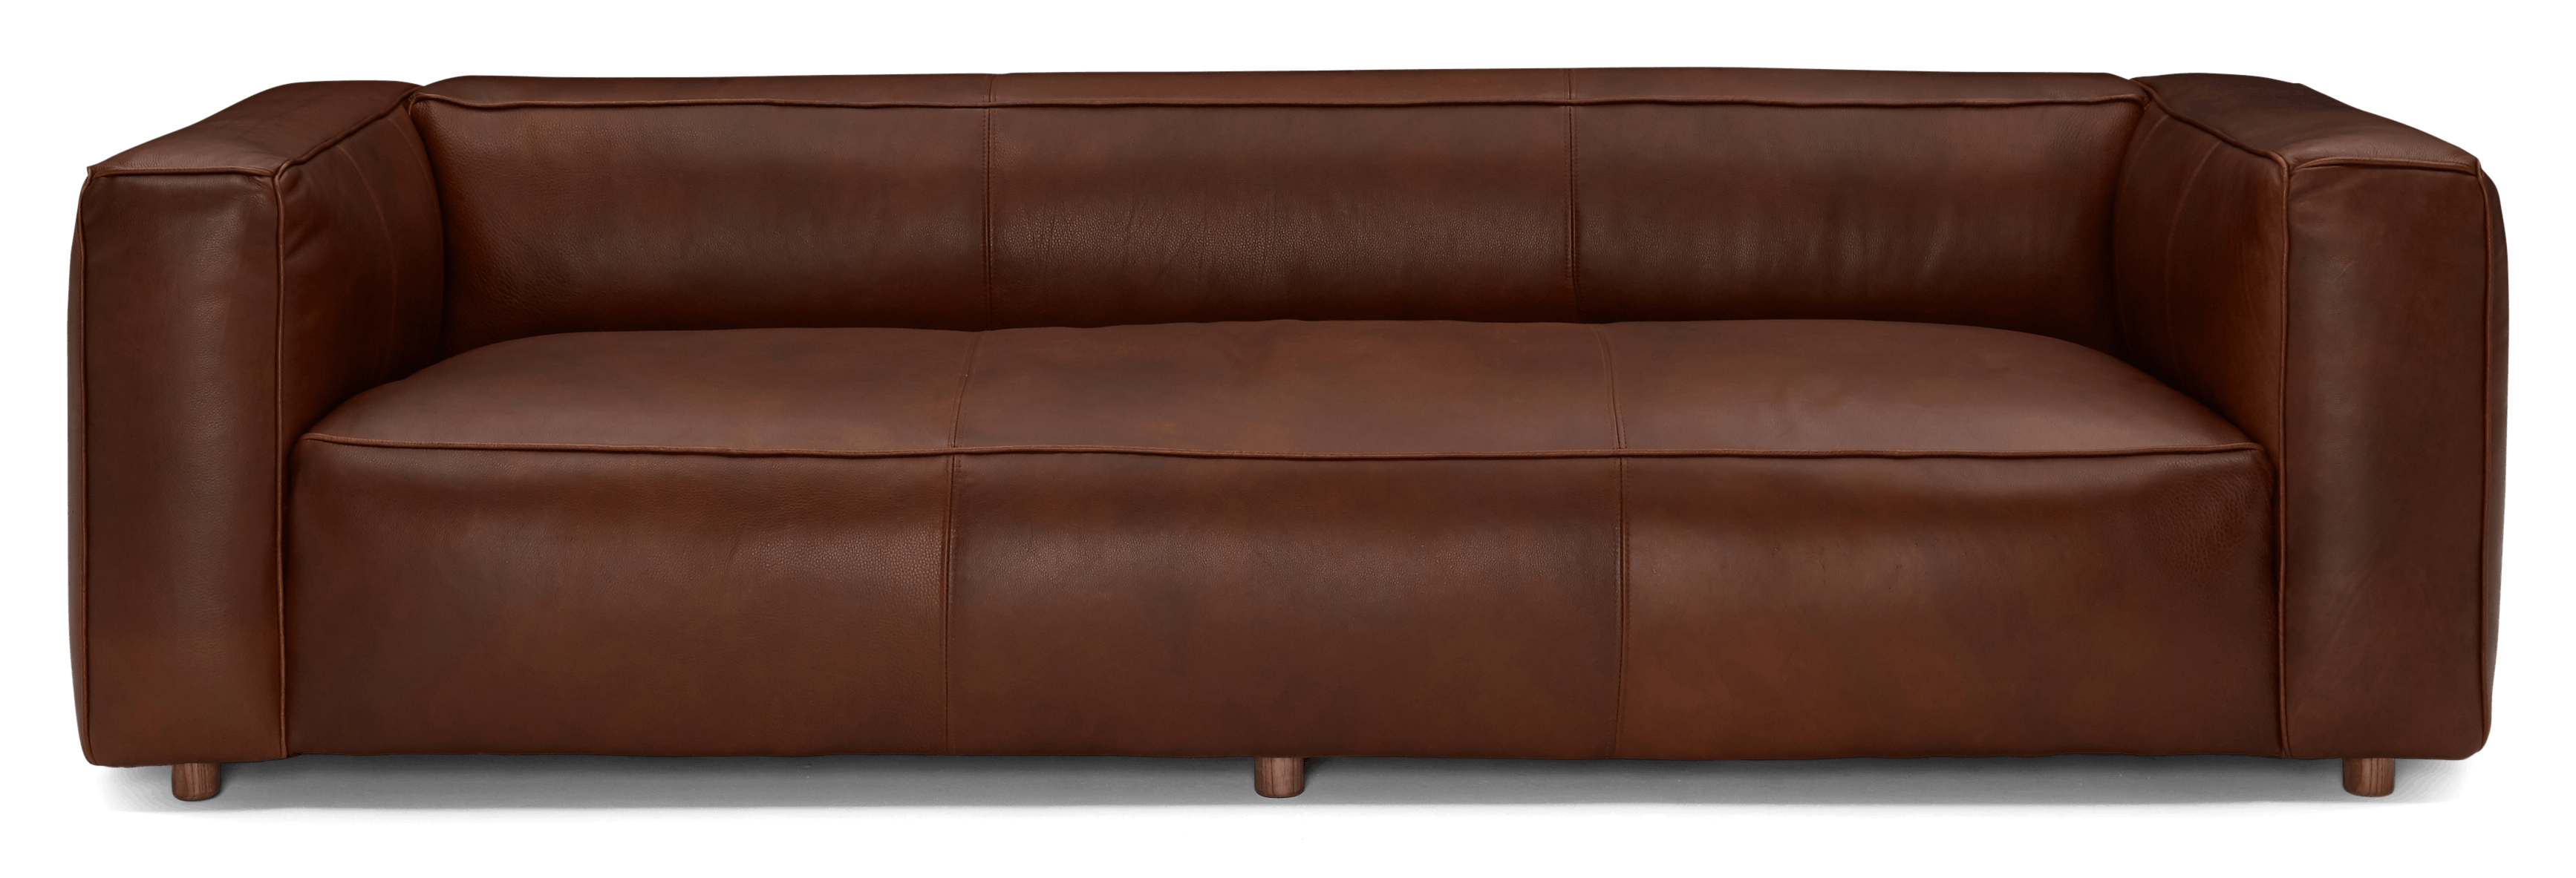 jaxon leather sofa reynoso chocolate